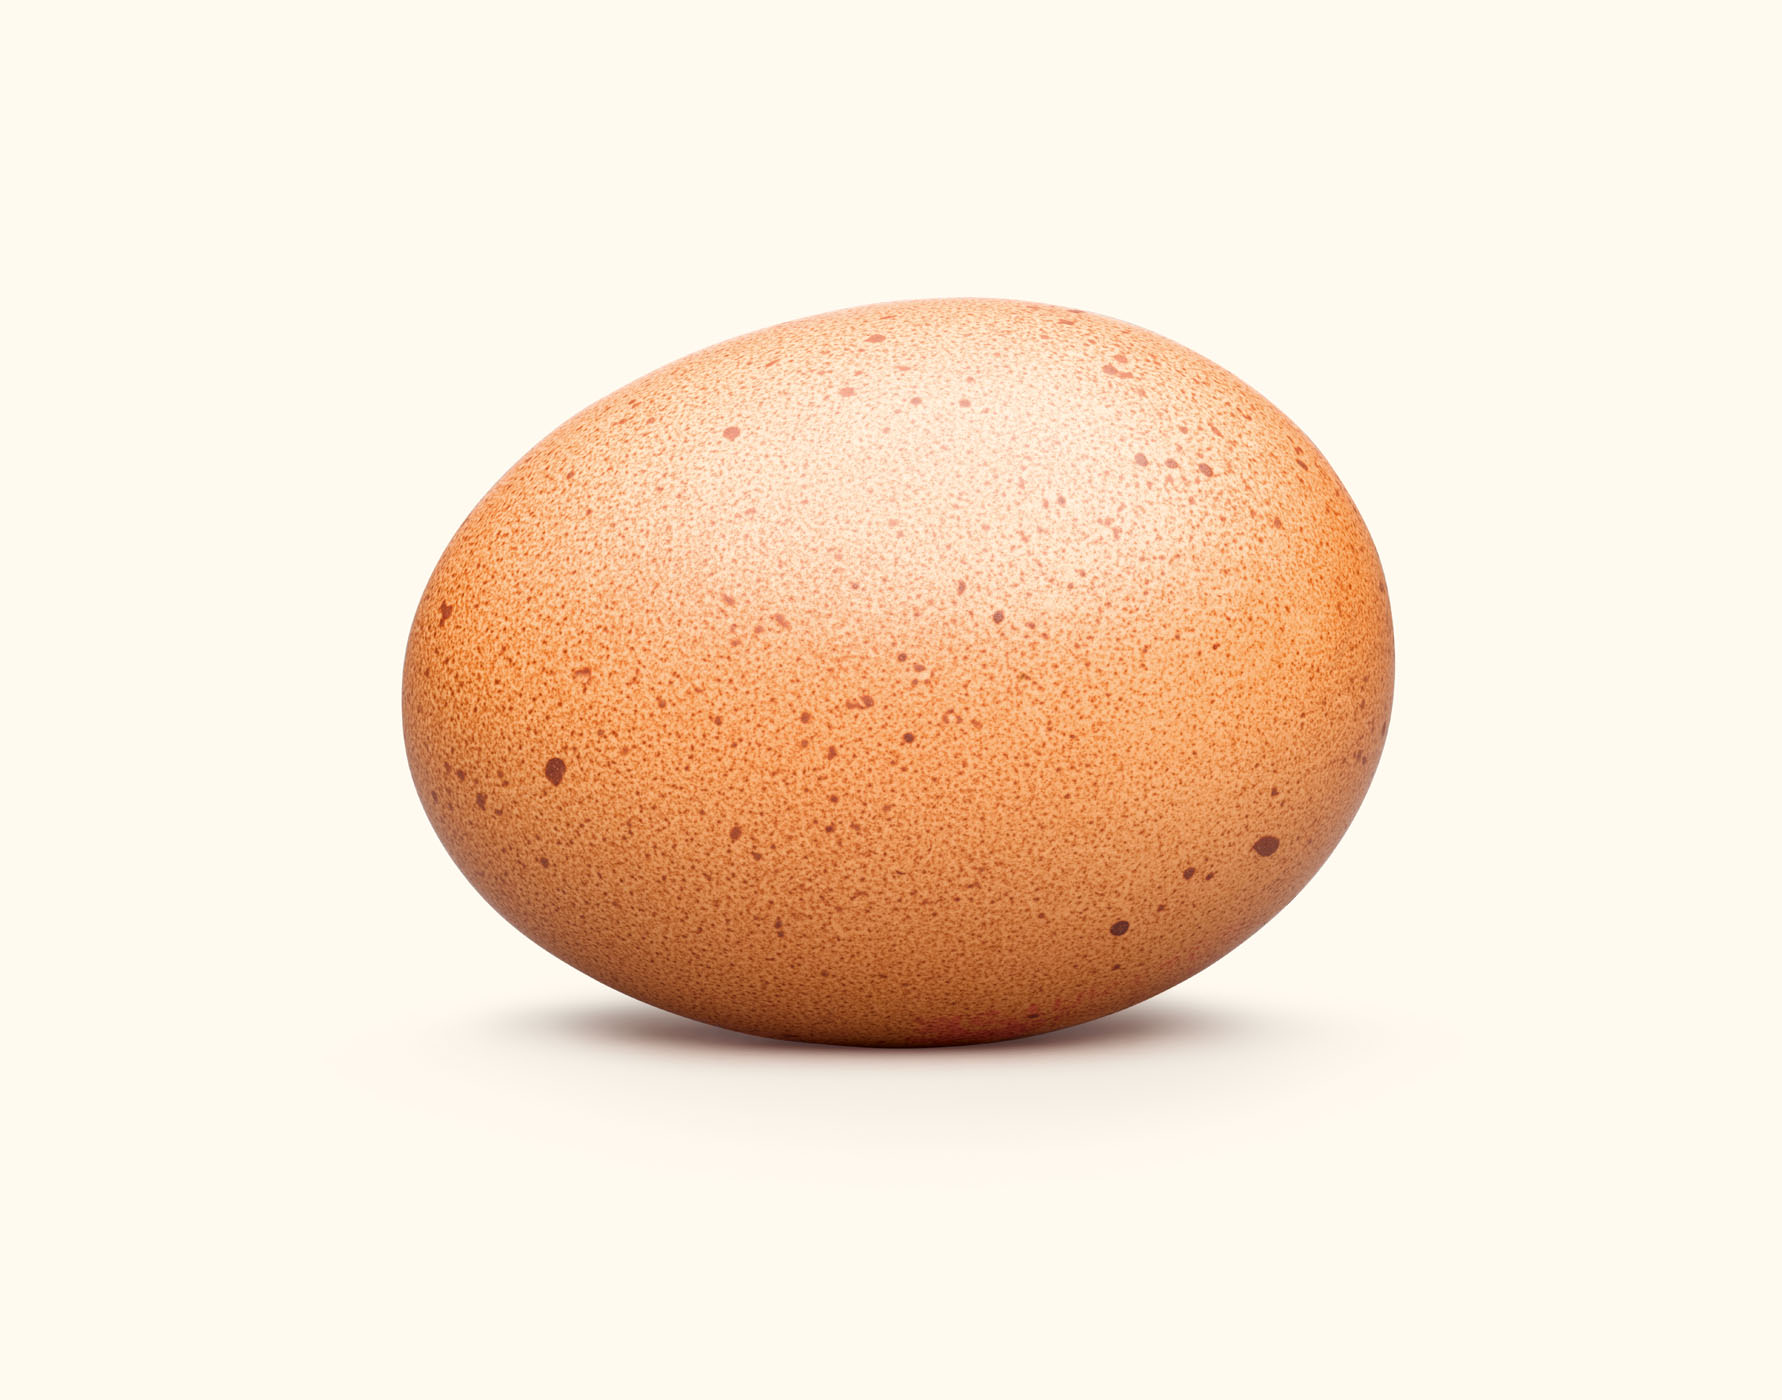 Egg on studio background by Alexander Kent